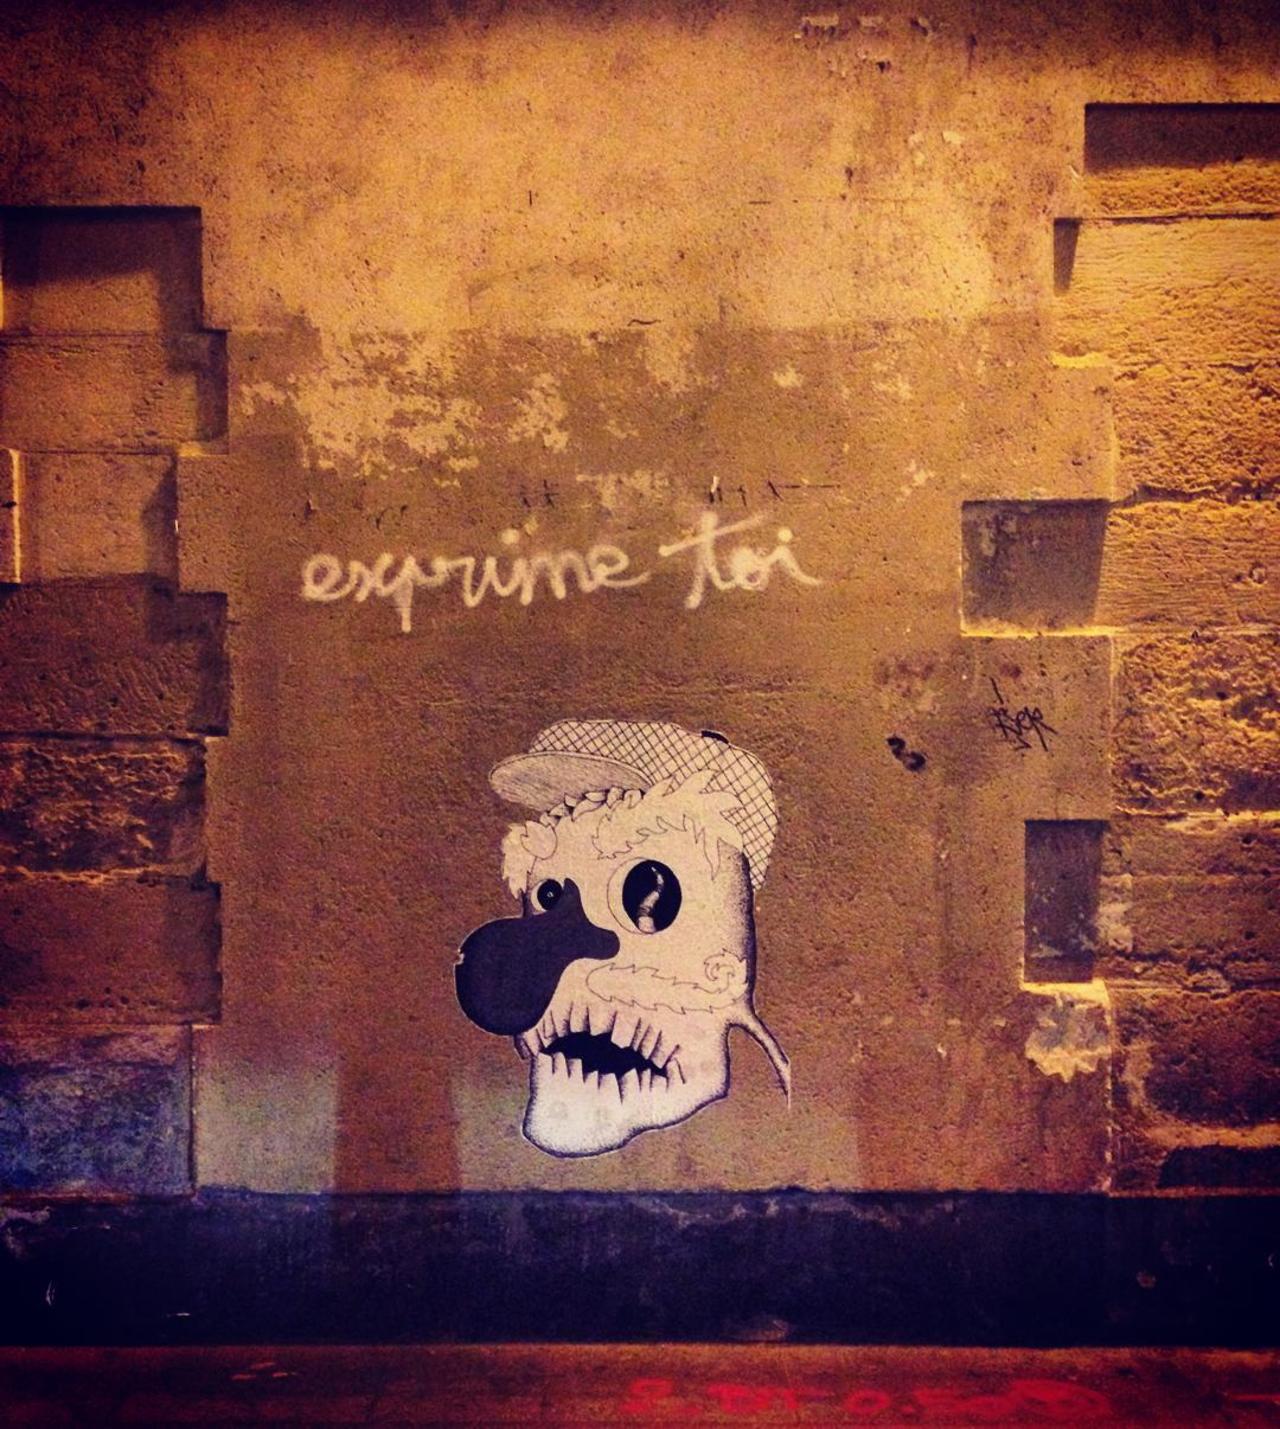 #Paris #graffiti photo by @streetrorart http://ift.tt/1H0BjGW #StreetArt https://t.co/cTPivZ6Kg8